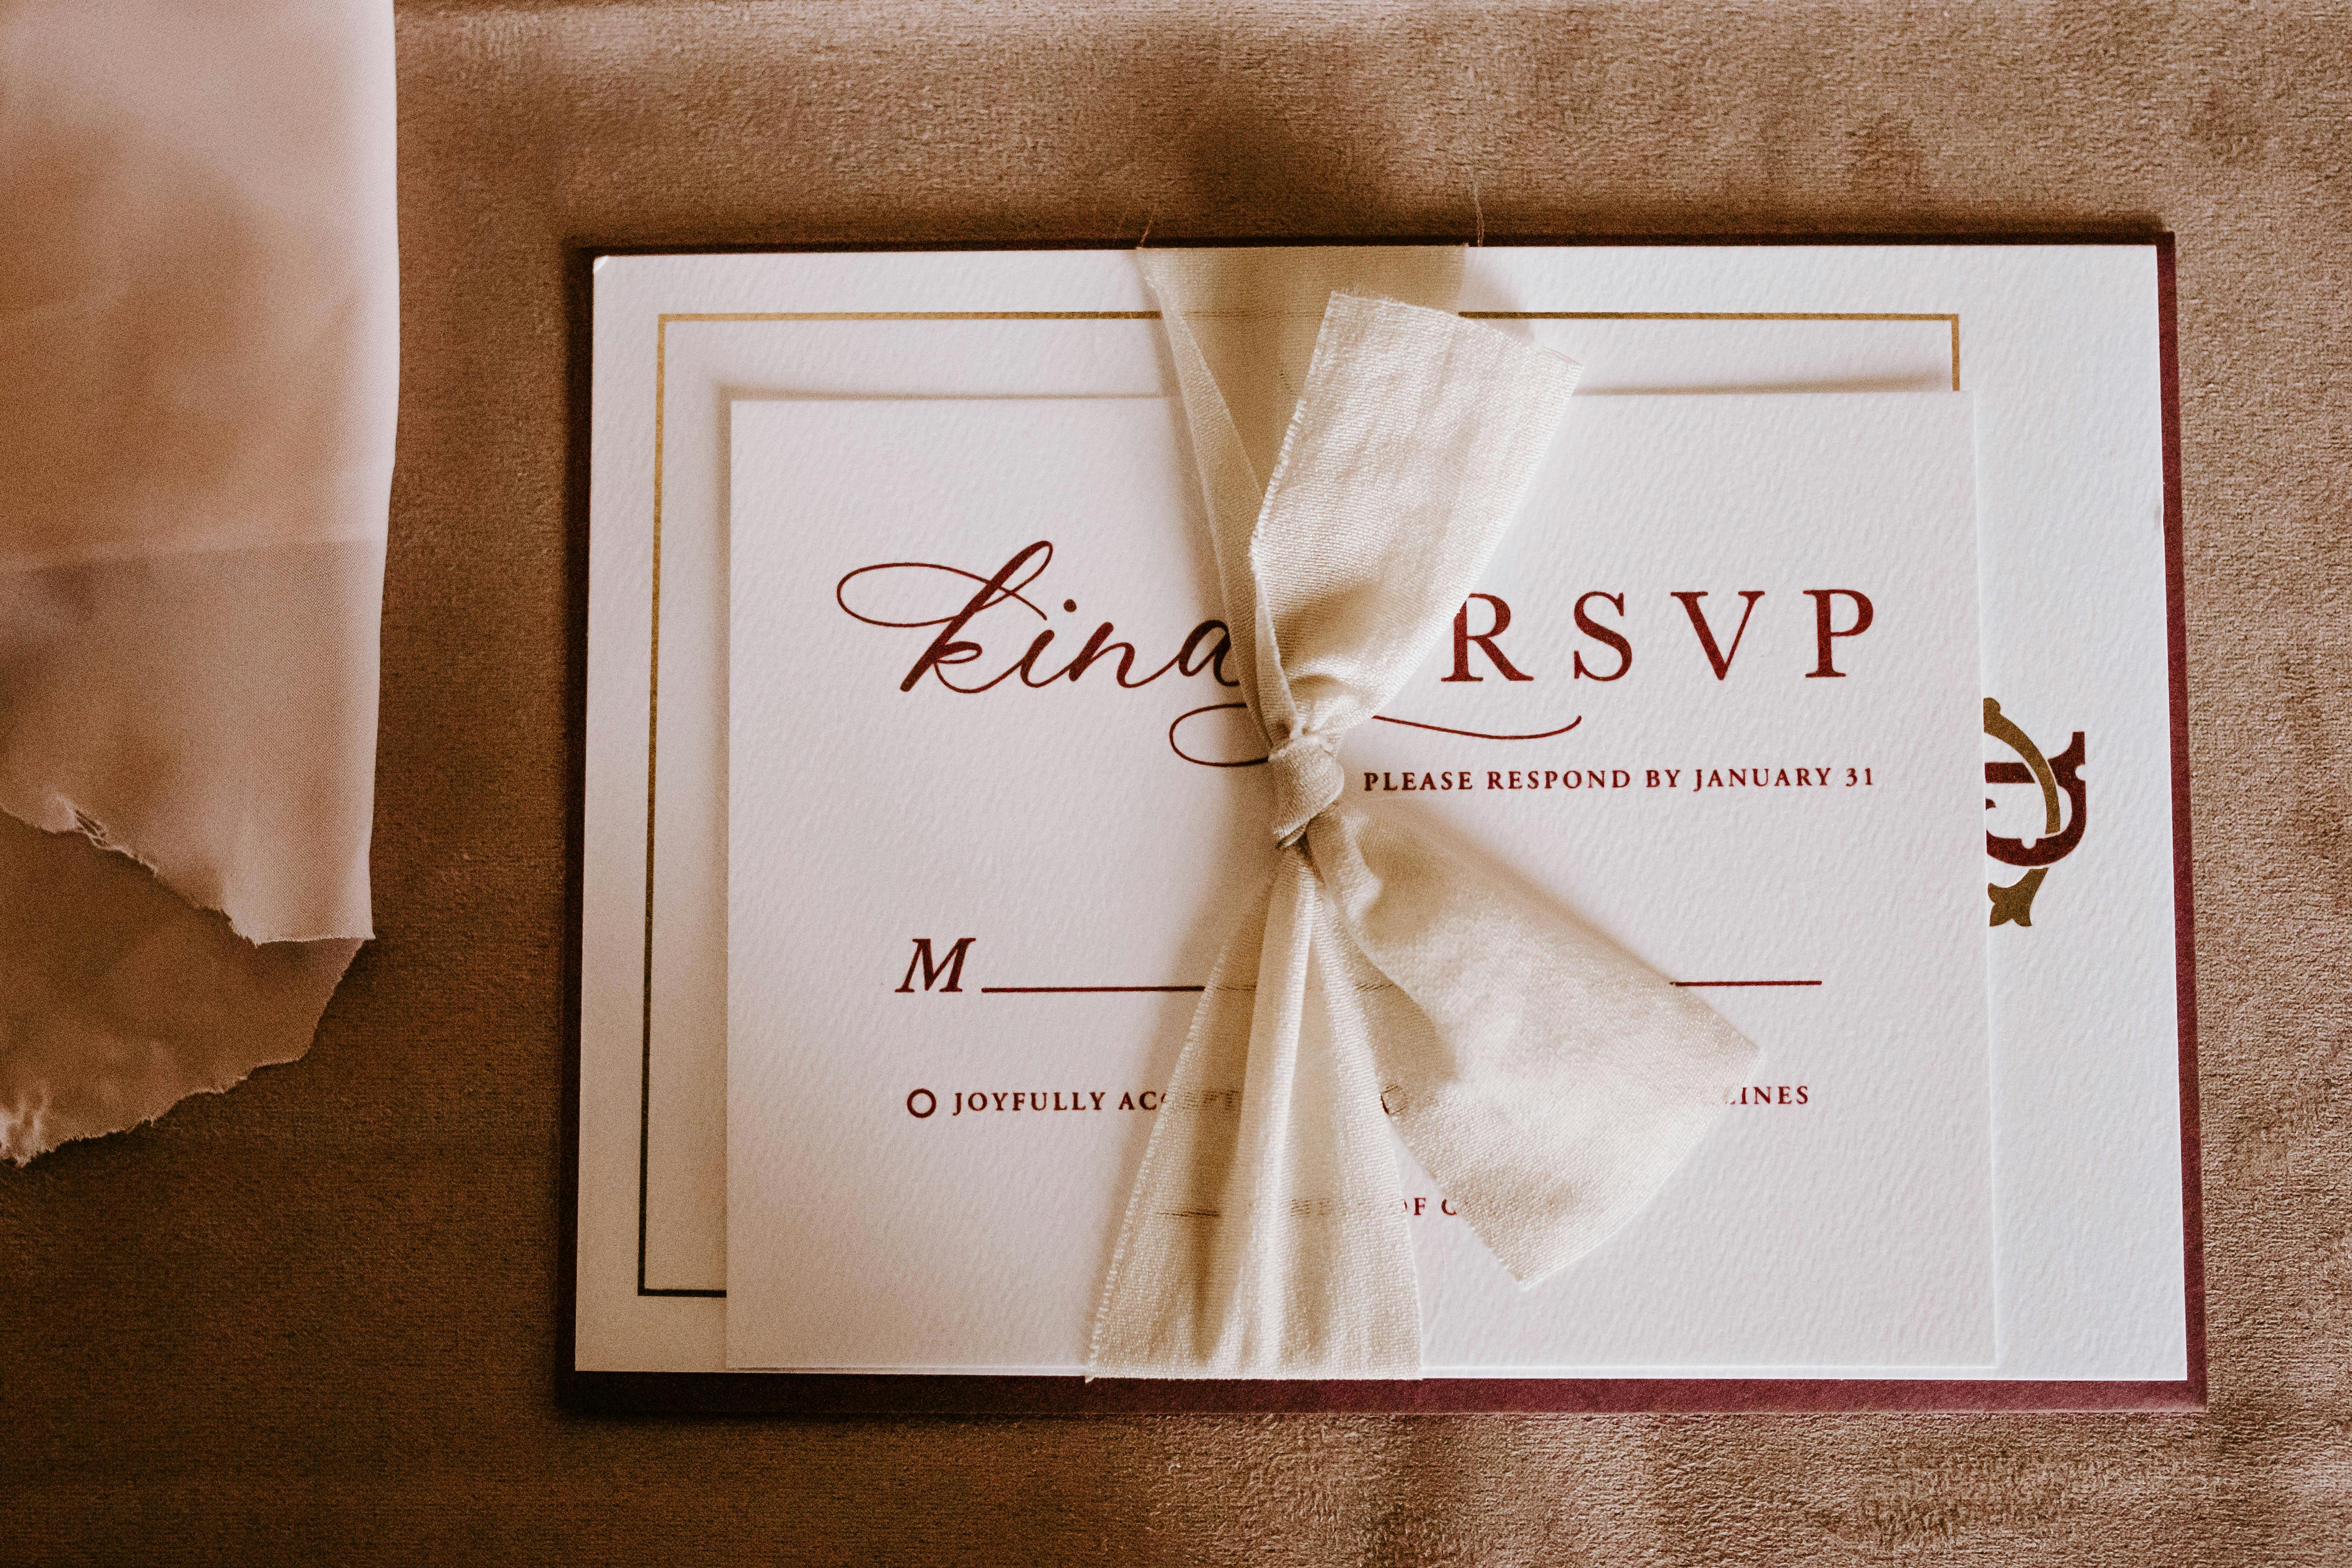 A wedding invite | Source: Pexels